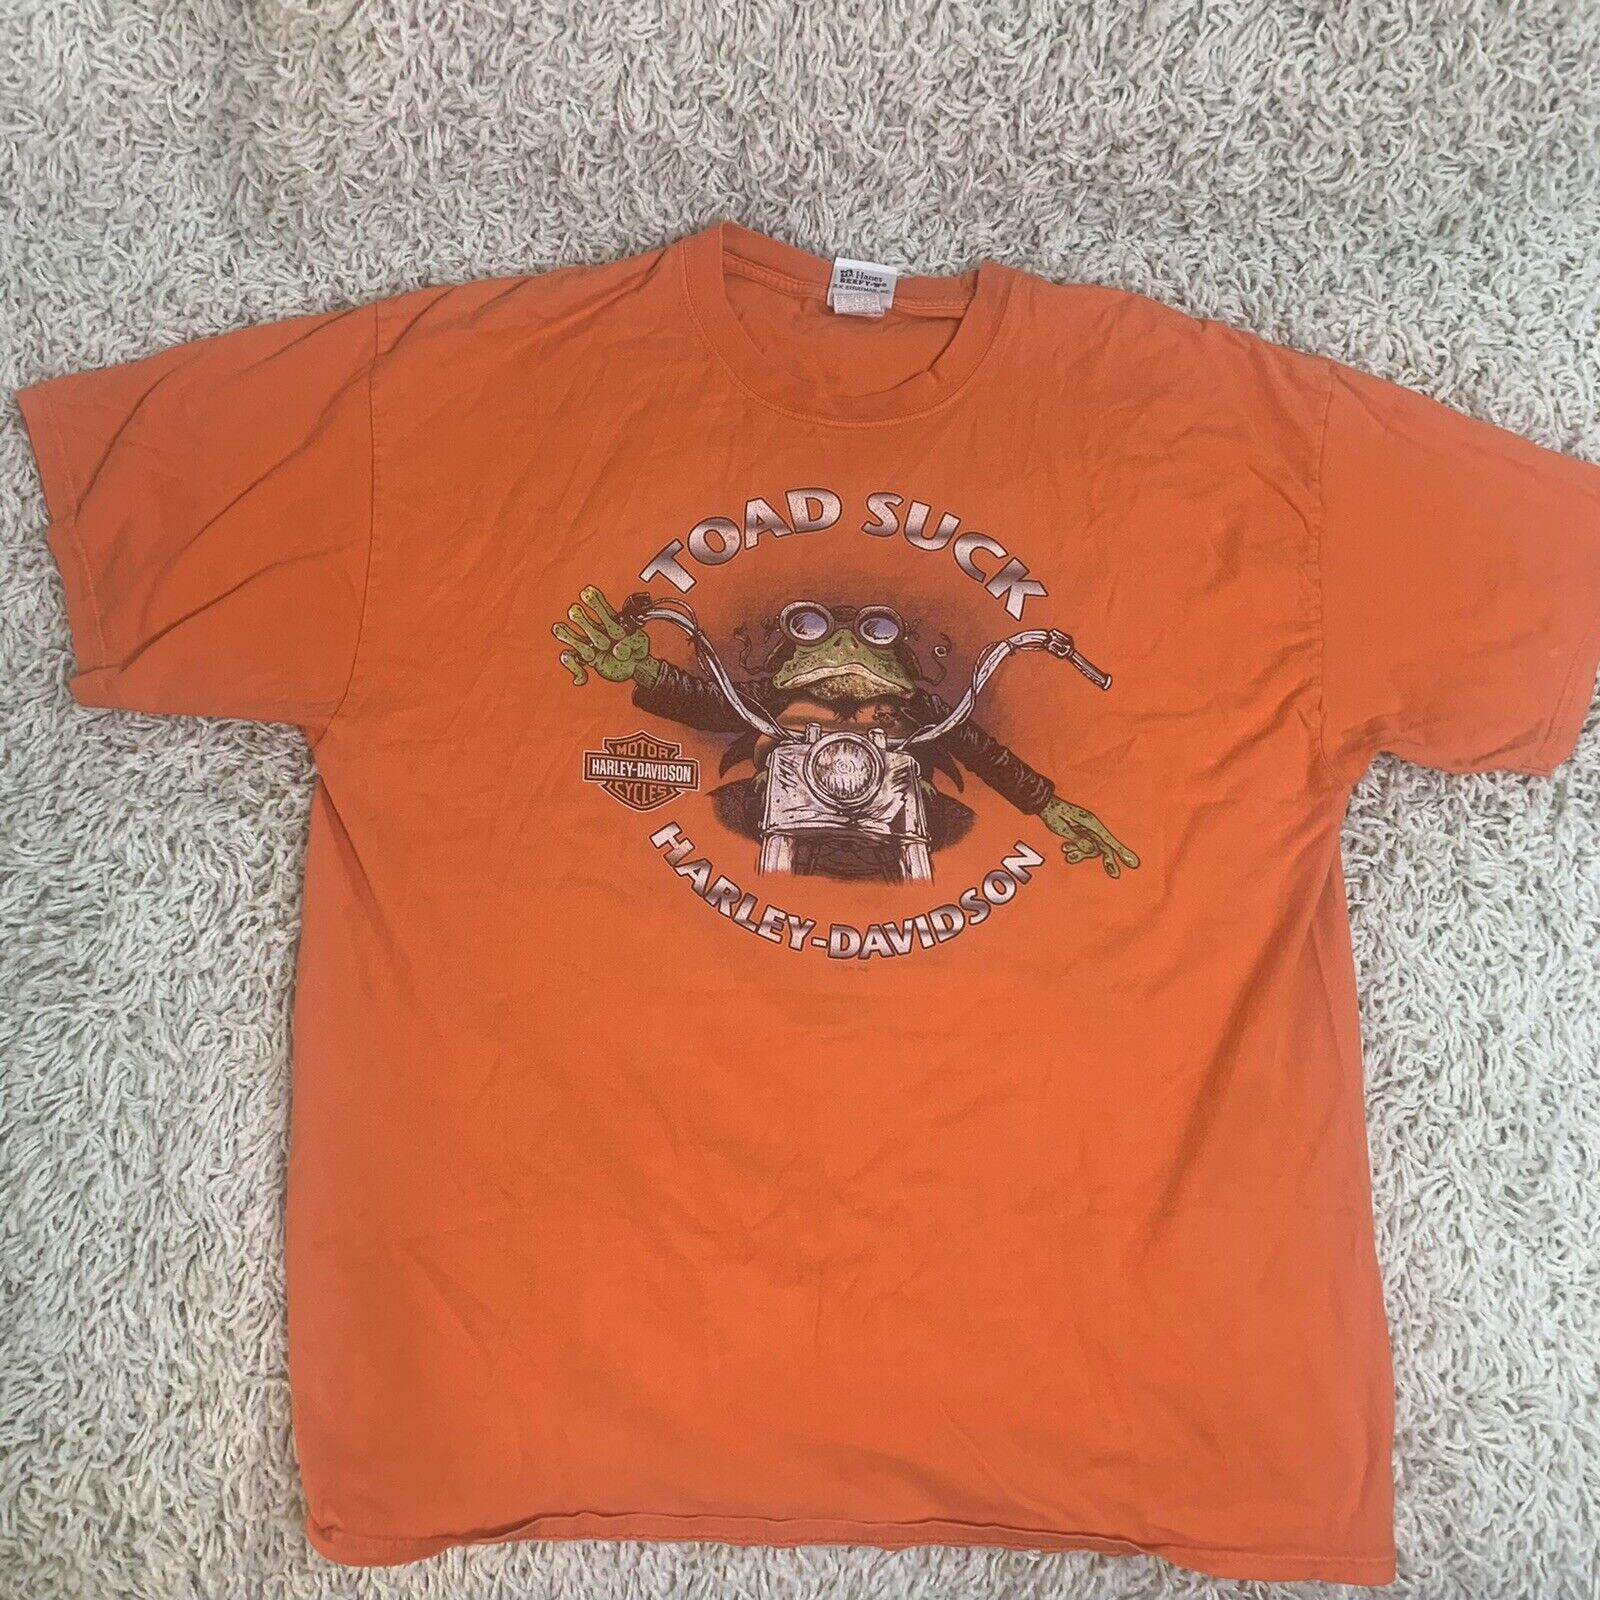 Harley Davidson Landers Toad Suck Orange Conway Arkansas T Shirt 2XL